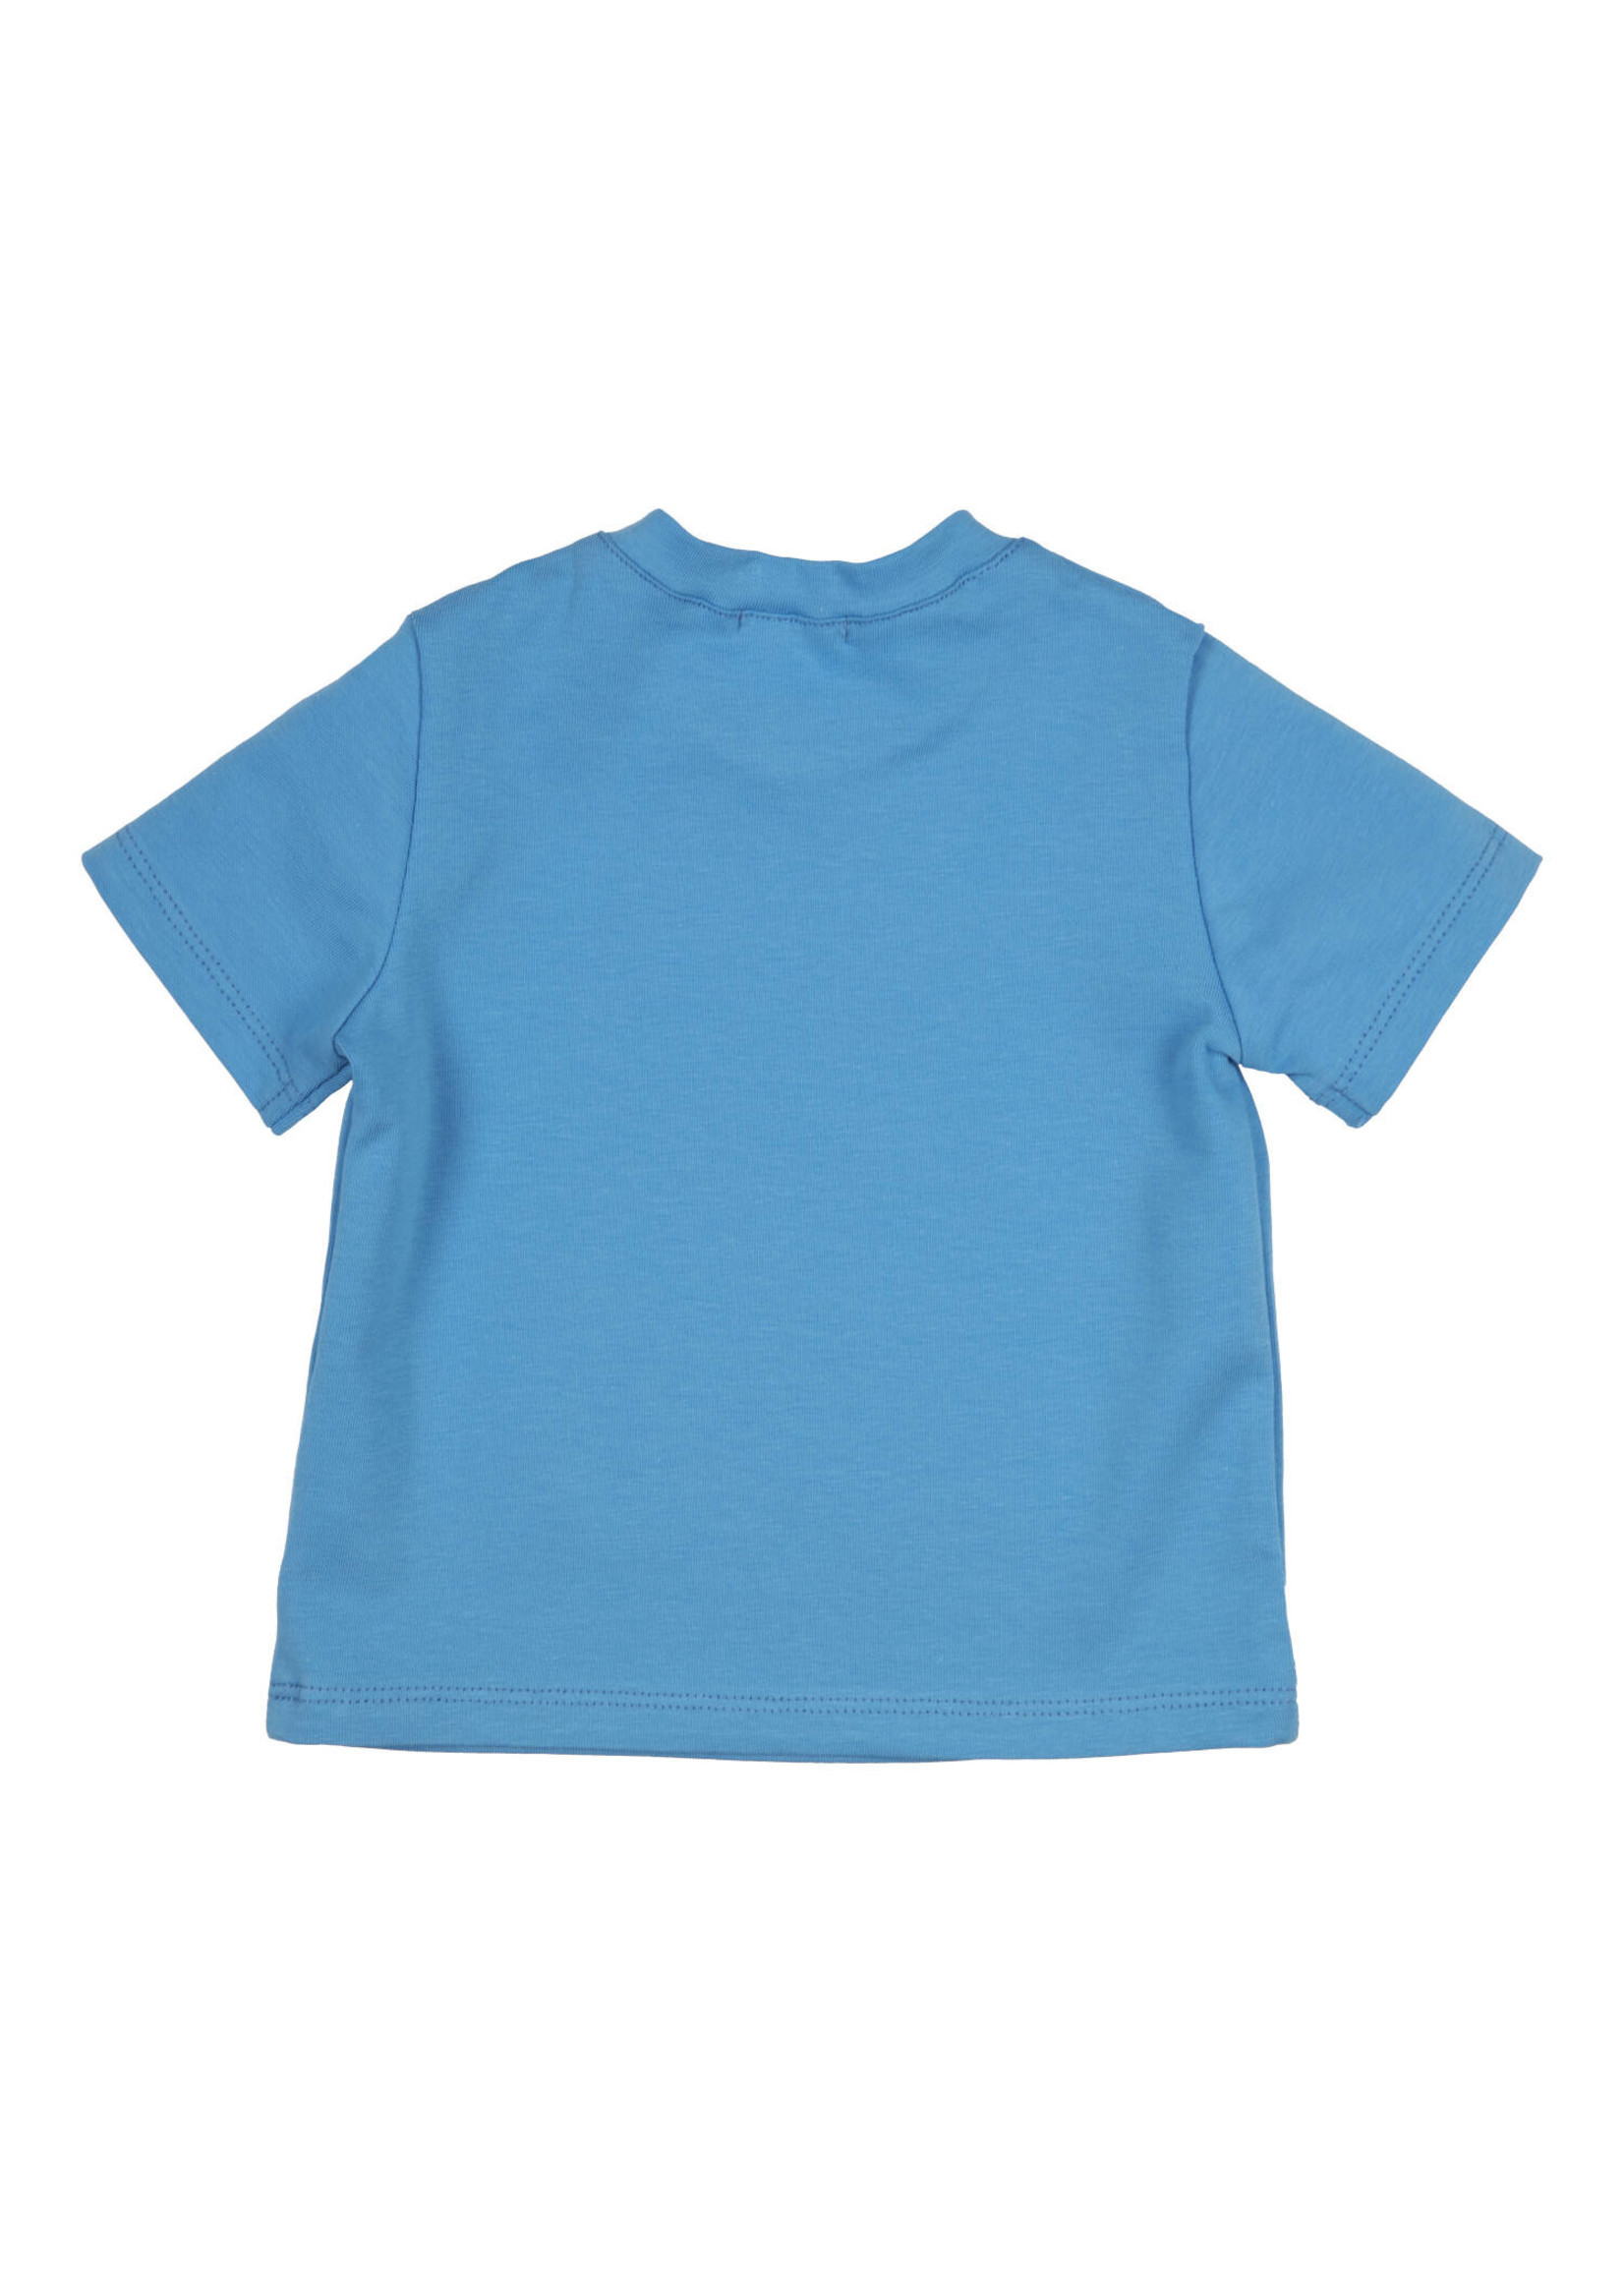 Gymp T-shirt Aerobic Blue 353-3334-20